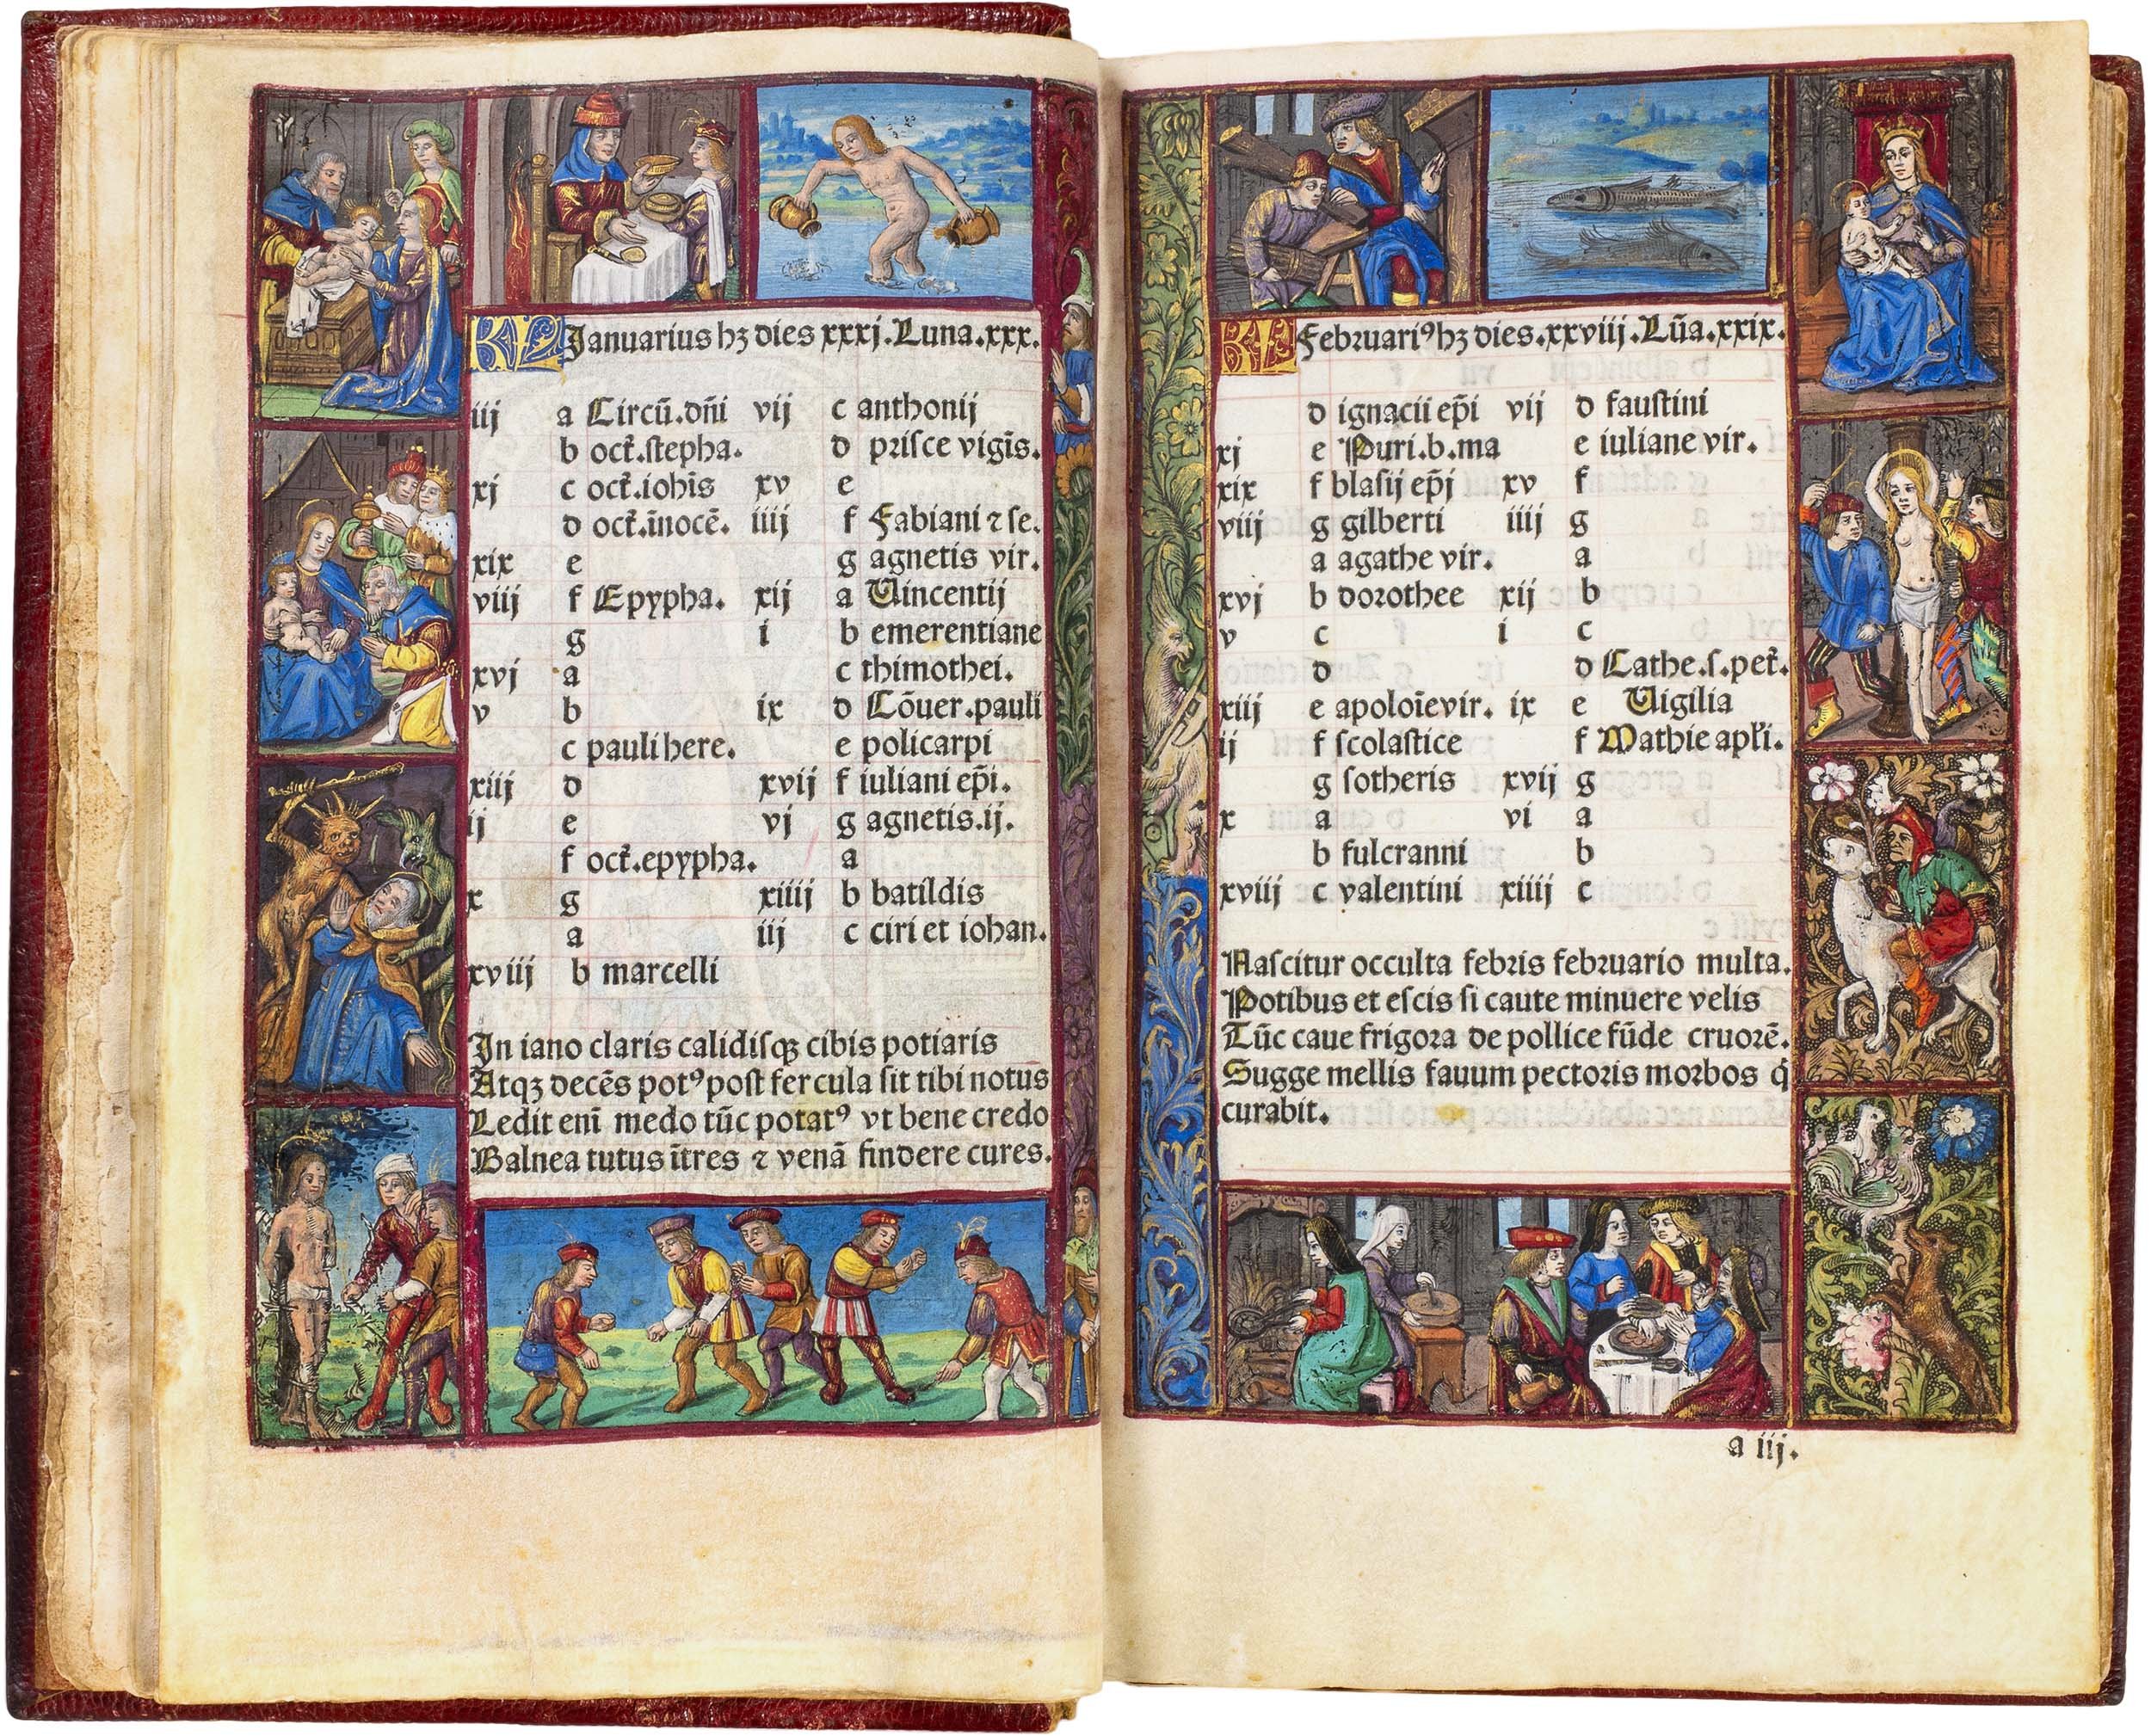 Horae-bmv-book-of-hours-Louis-XII-martainville-master-philippa-guelders-paris-pigouchet-vostre-15.10.1499-7.jpg